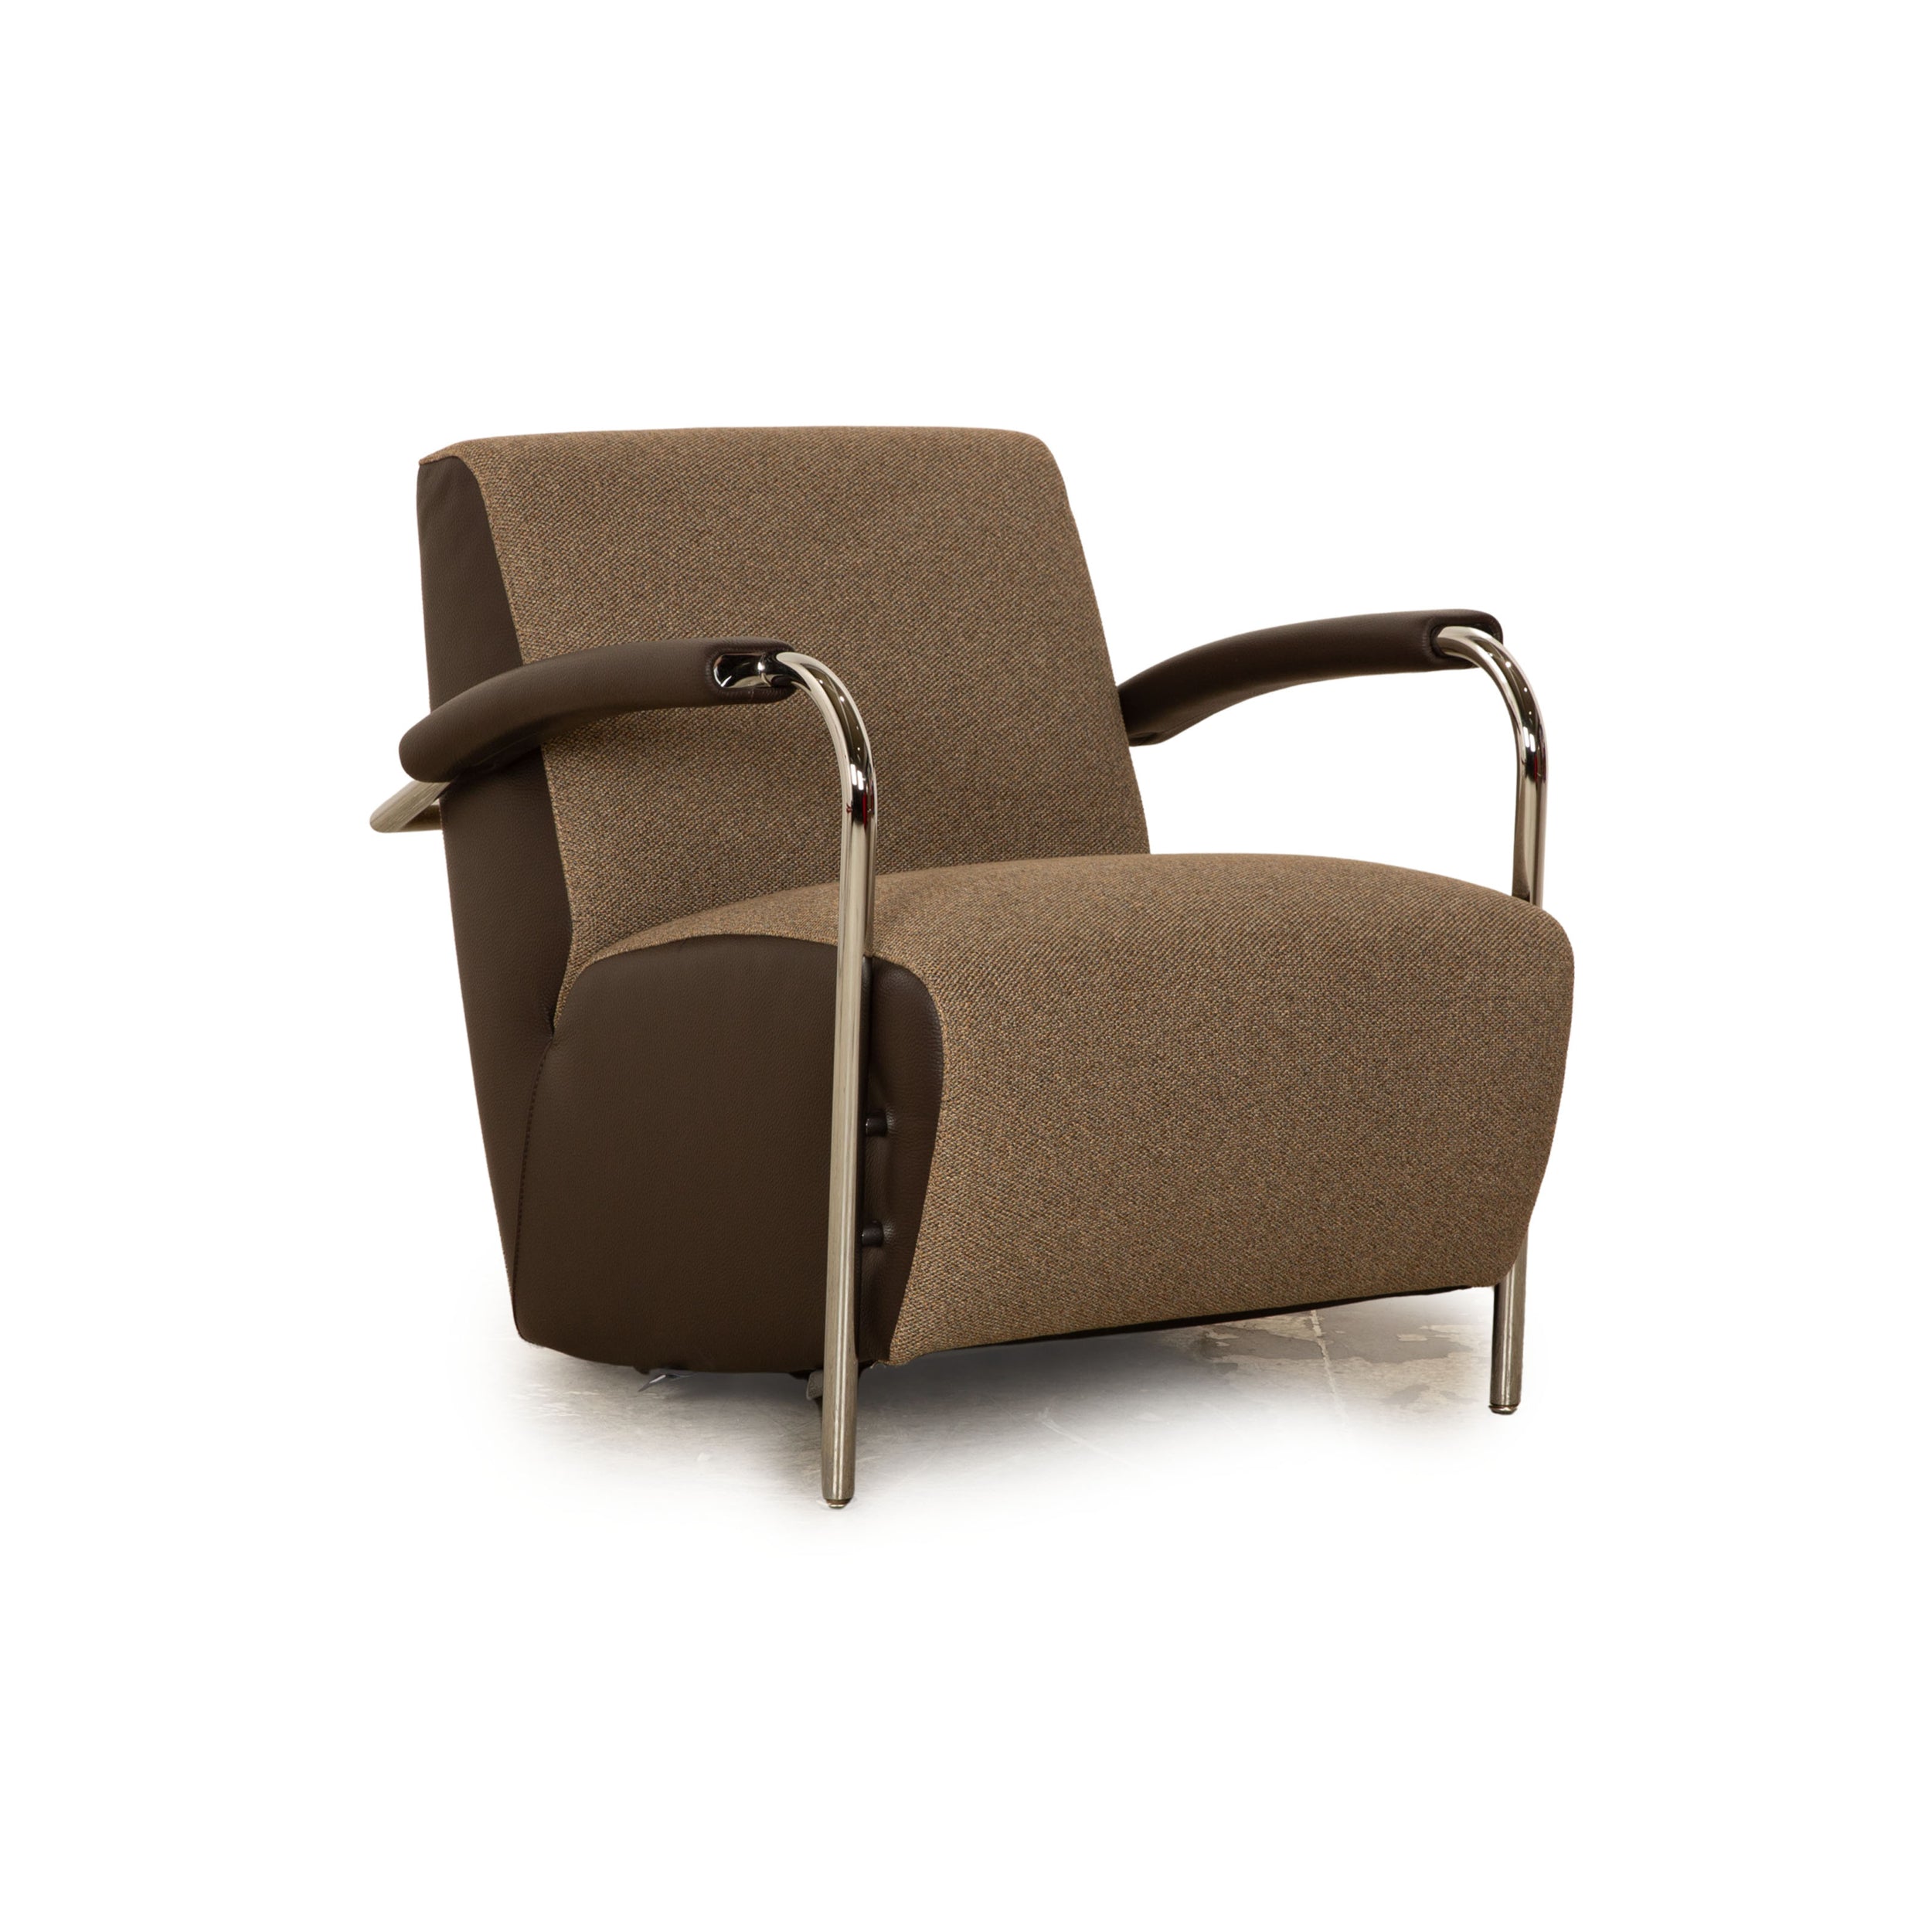 Leolux Scylla fabric armchair brown leather